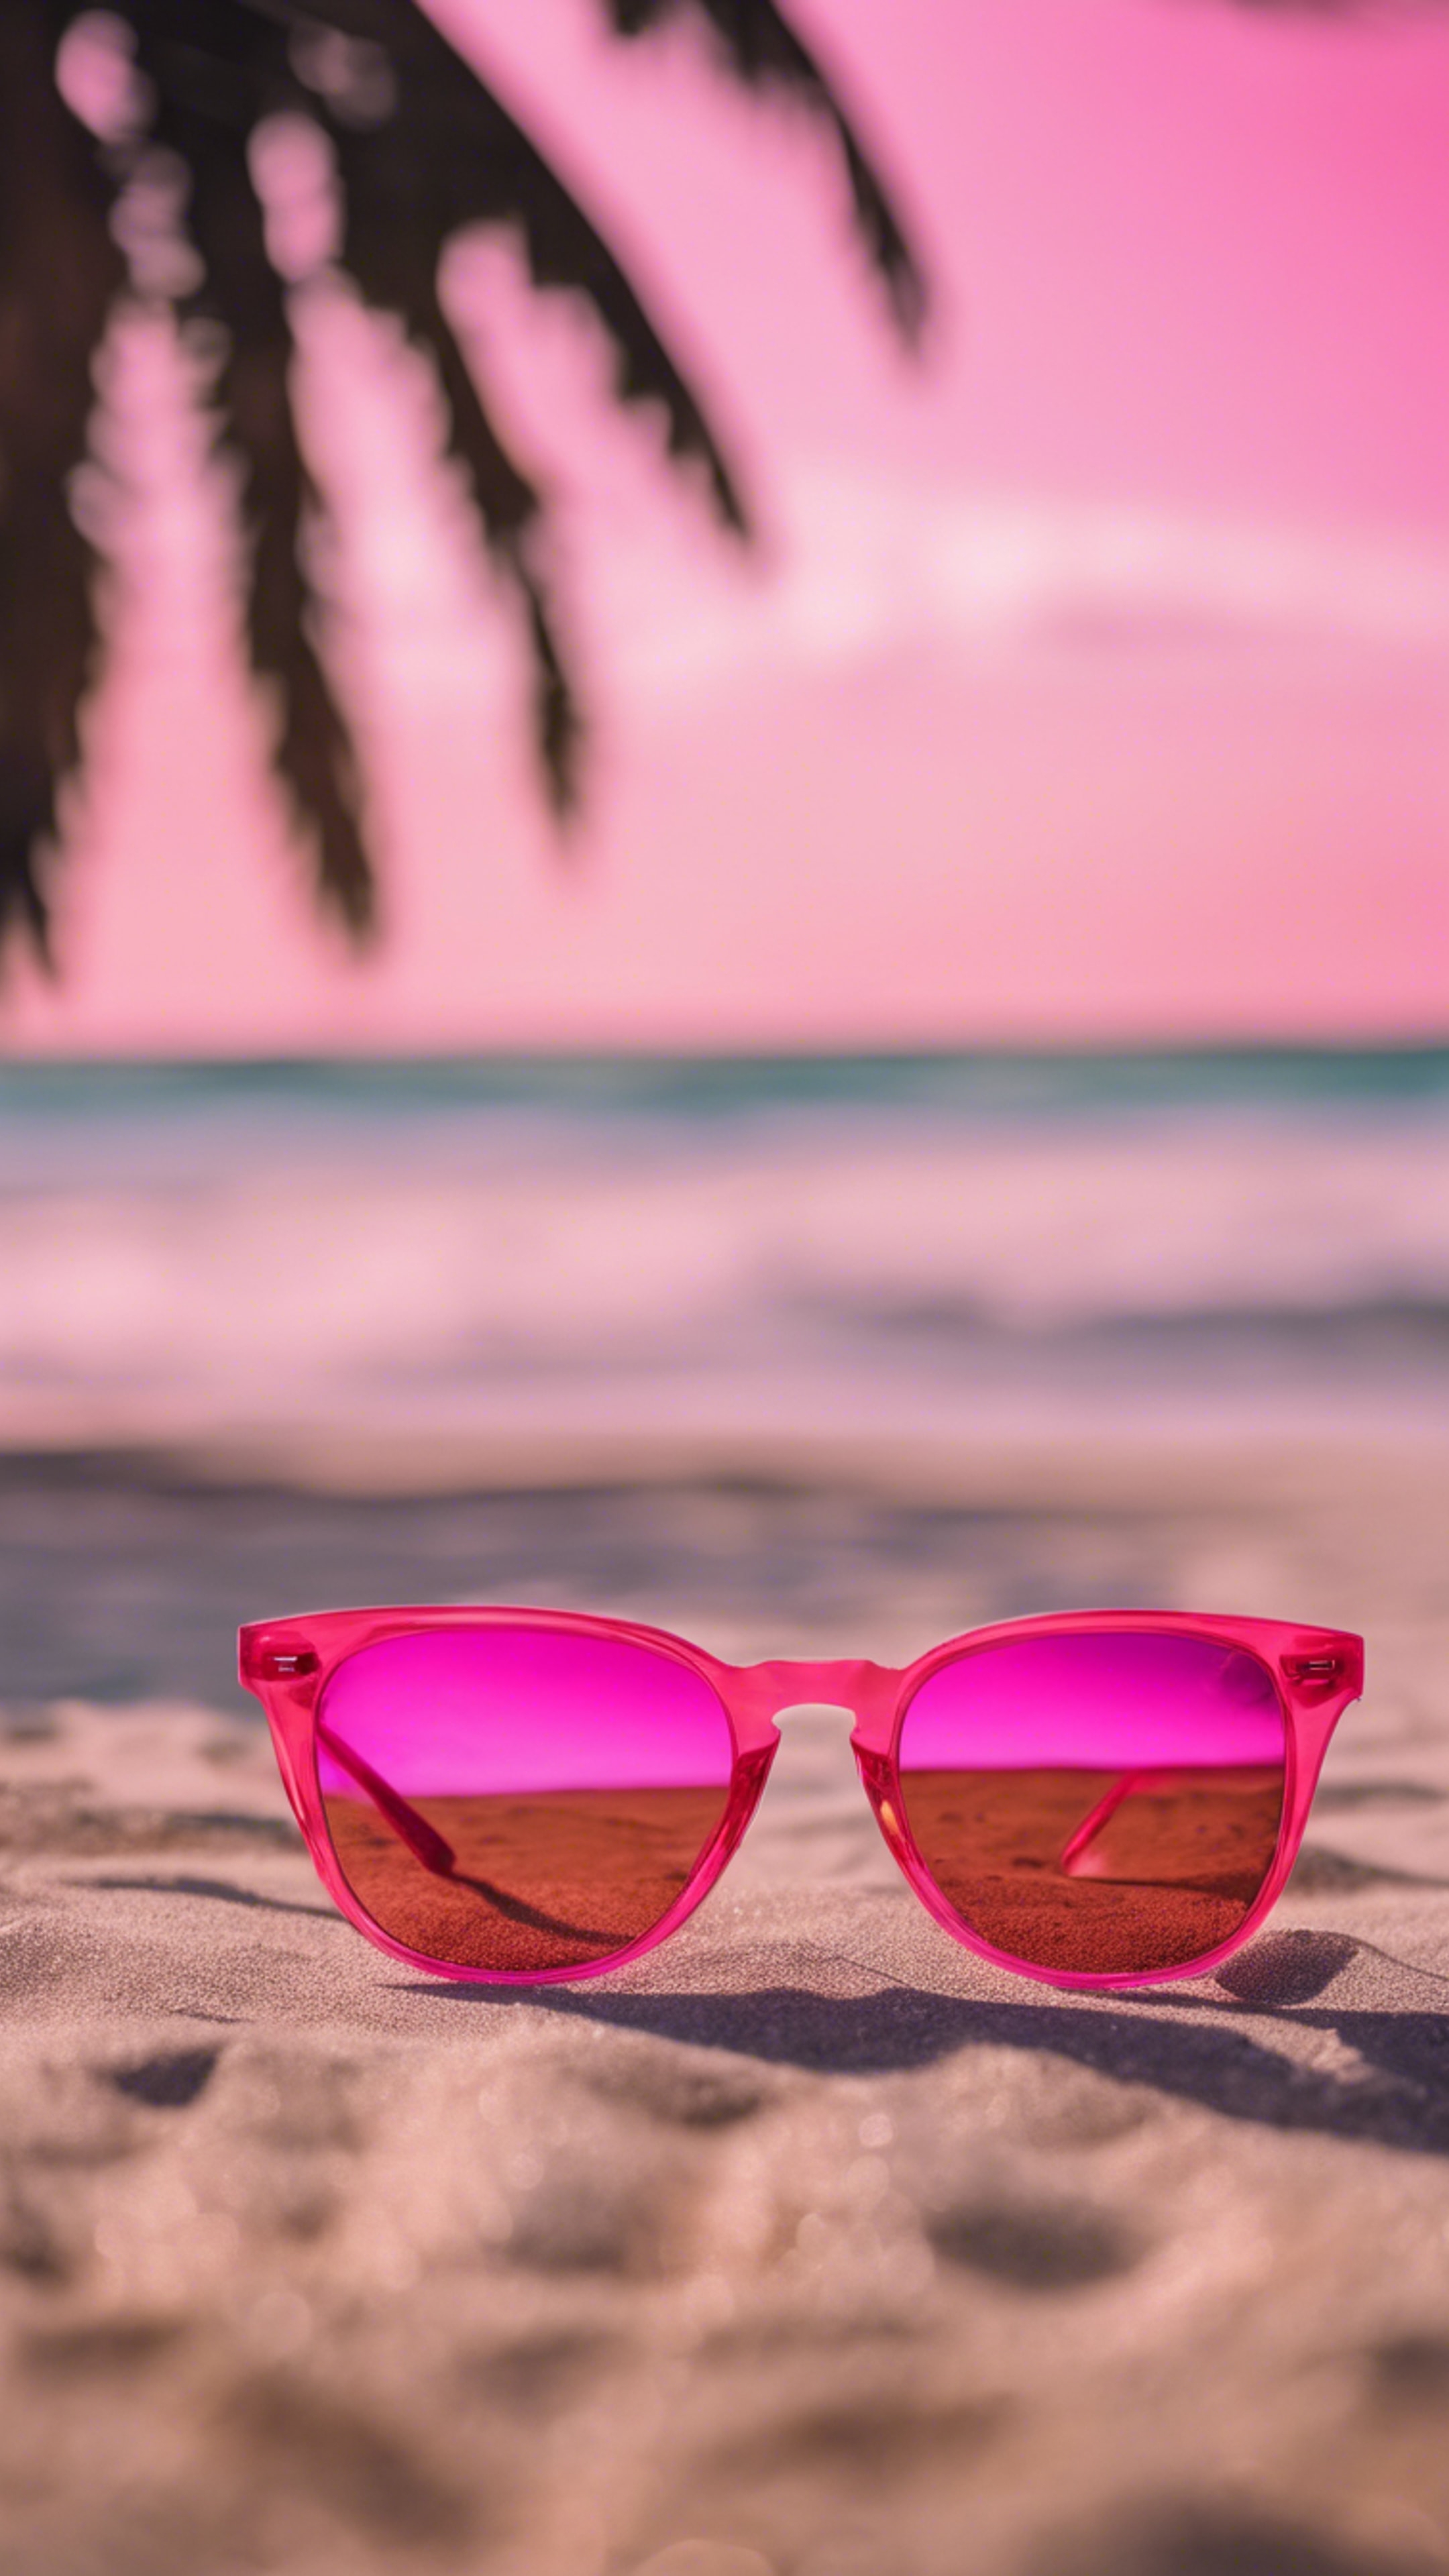 A pair of neon pink sunglasses reflecting the vibrant summer beach scene.壁紙[24de7597184840d886b9]